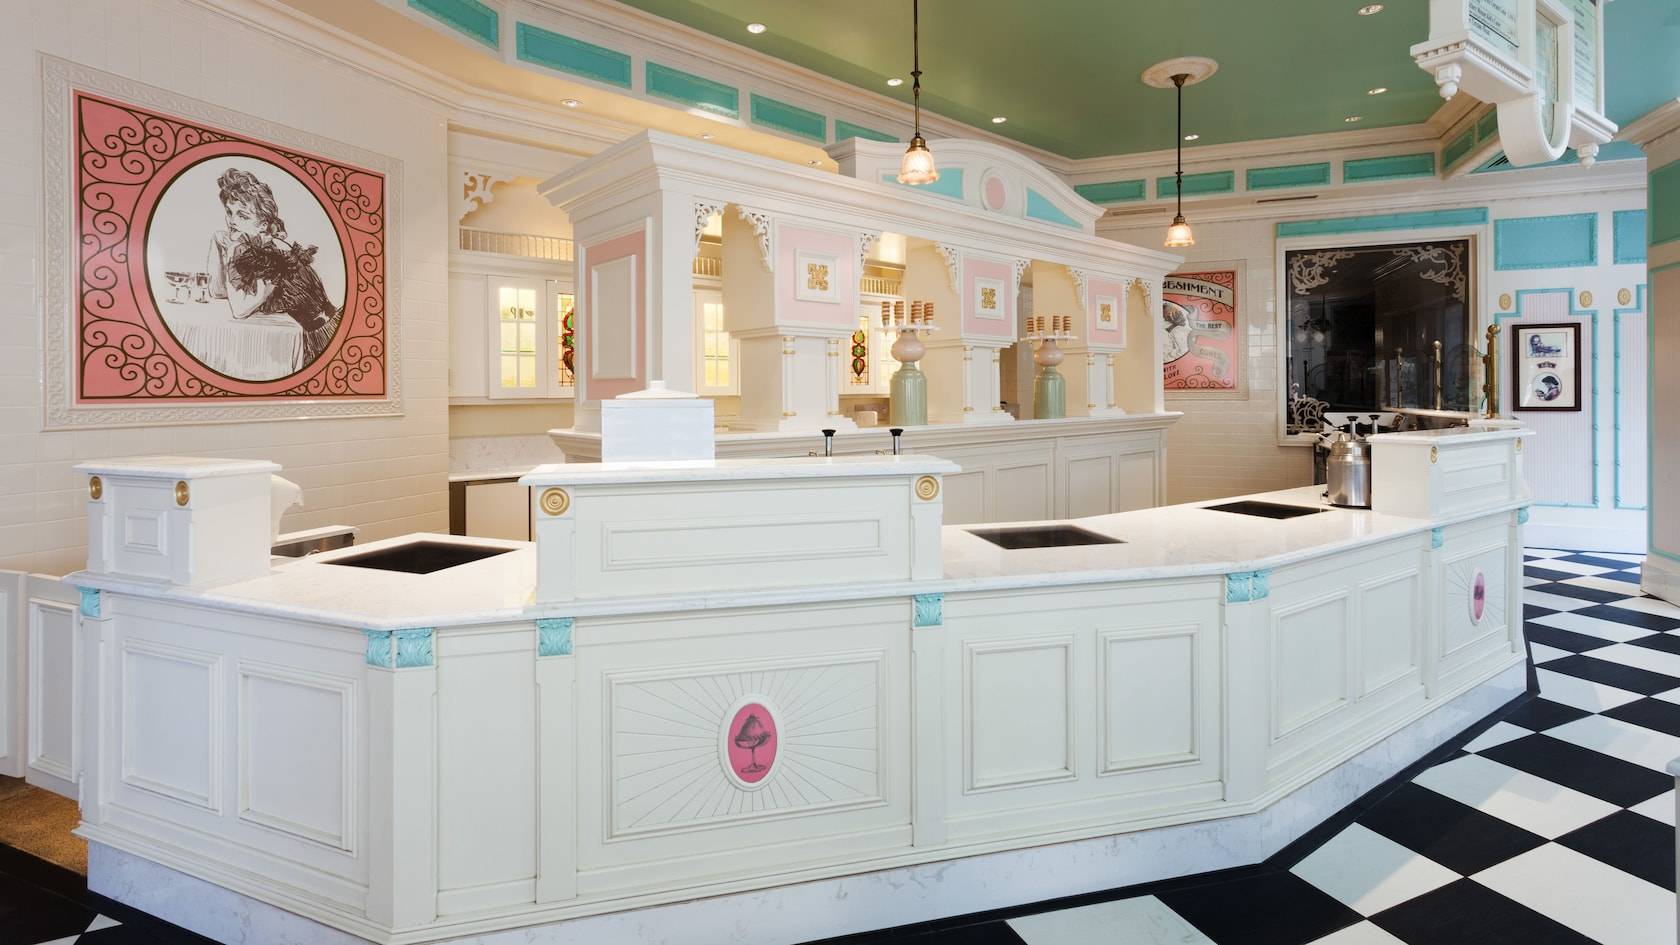 Plaza Ice Cream Parlor Overview  Disney's Magic Kingdom Dining - DVC Shop